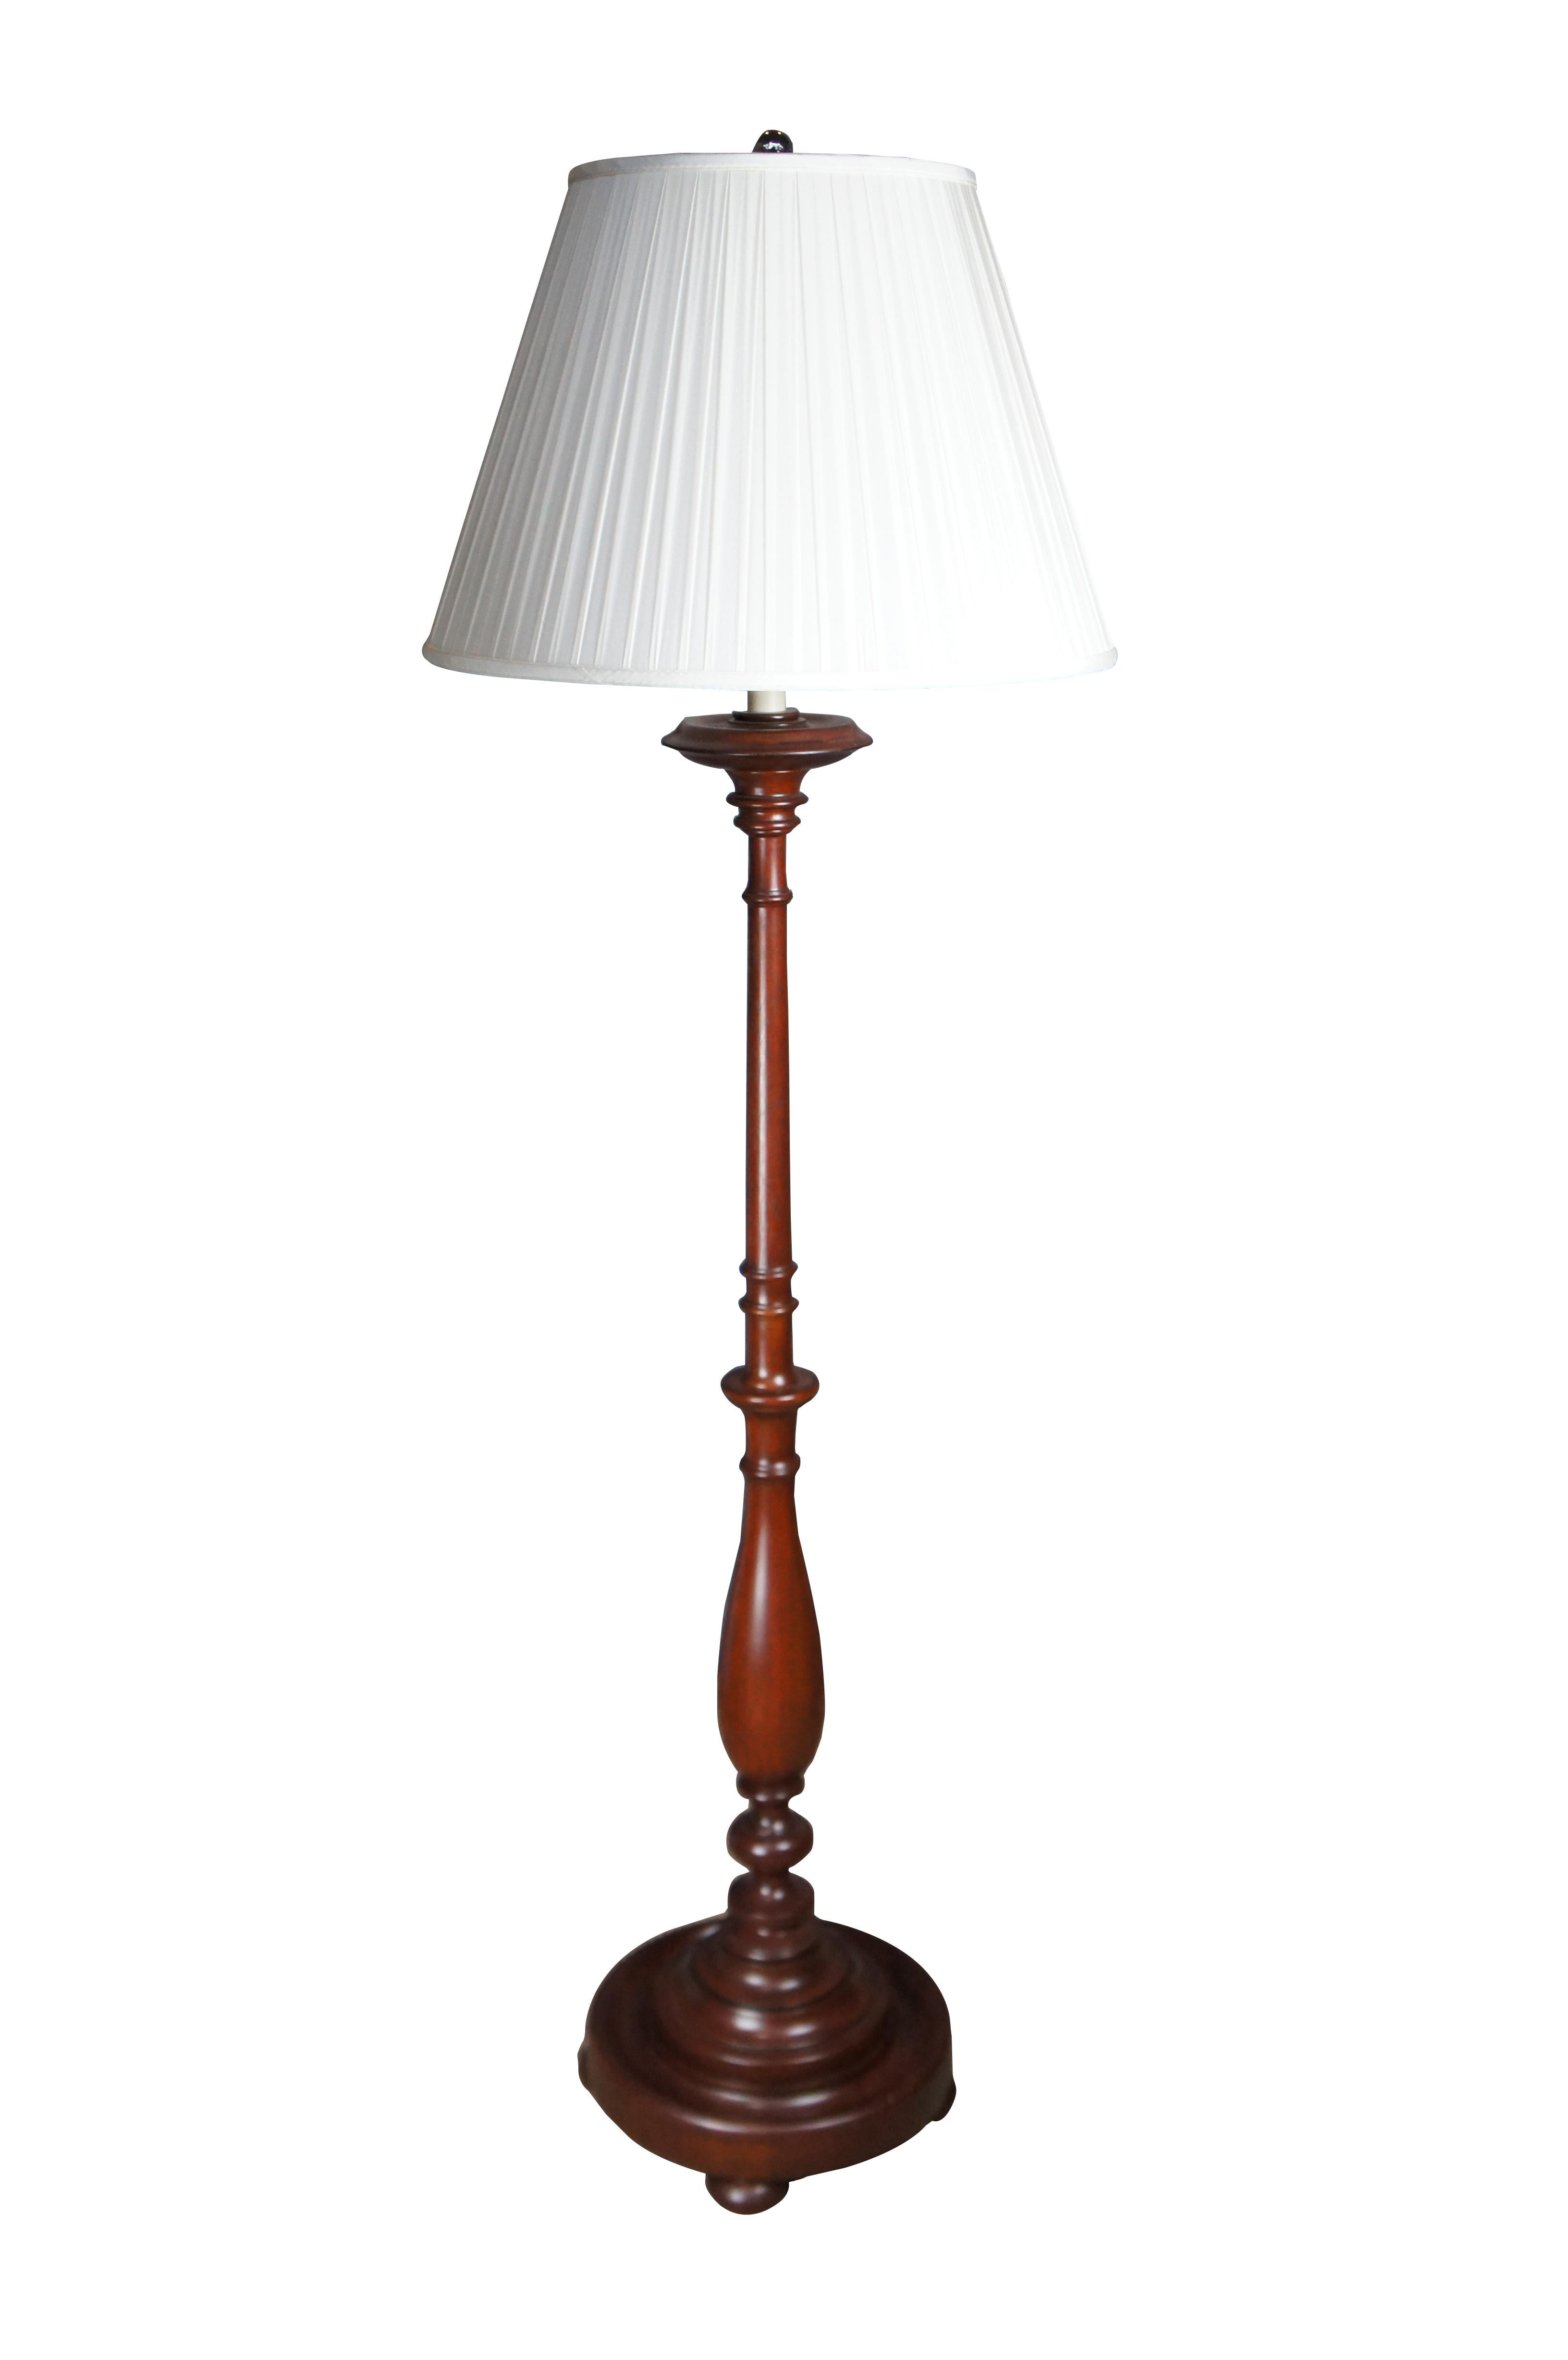 Ralph Lauren Traditionelle Mahagoni Kerze Stand Stehlampe Verstellbare Höhe 68